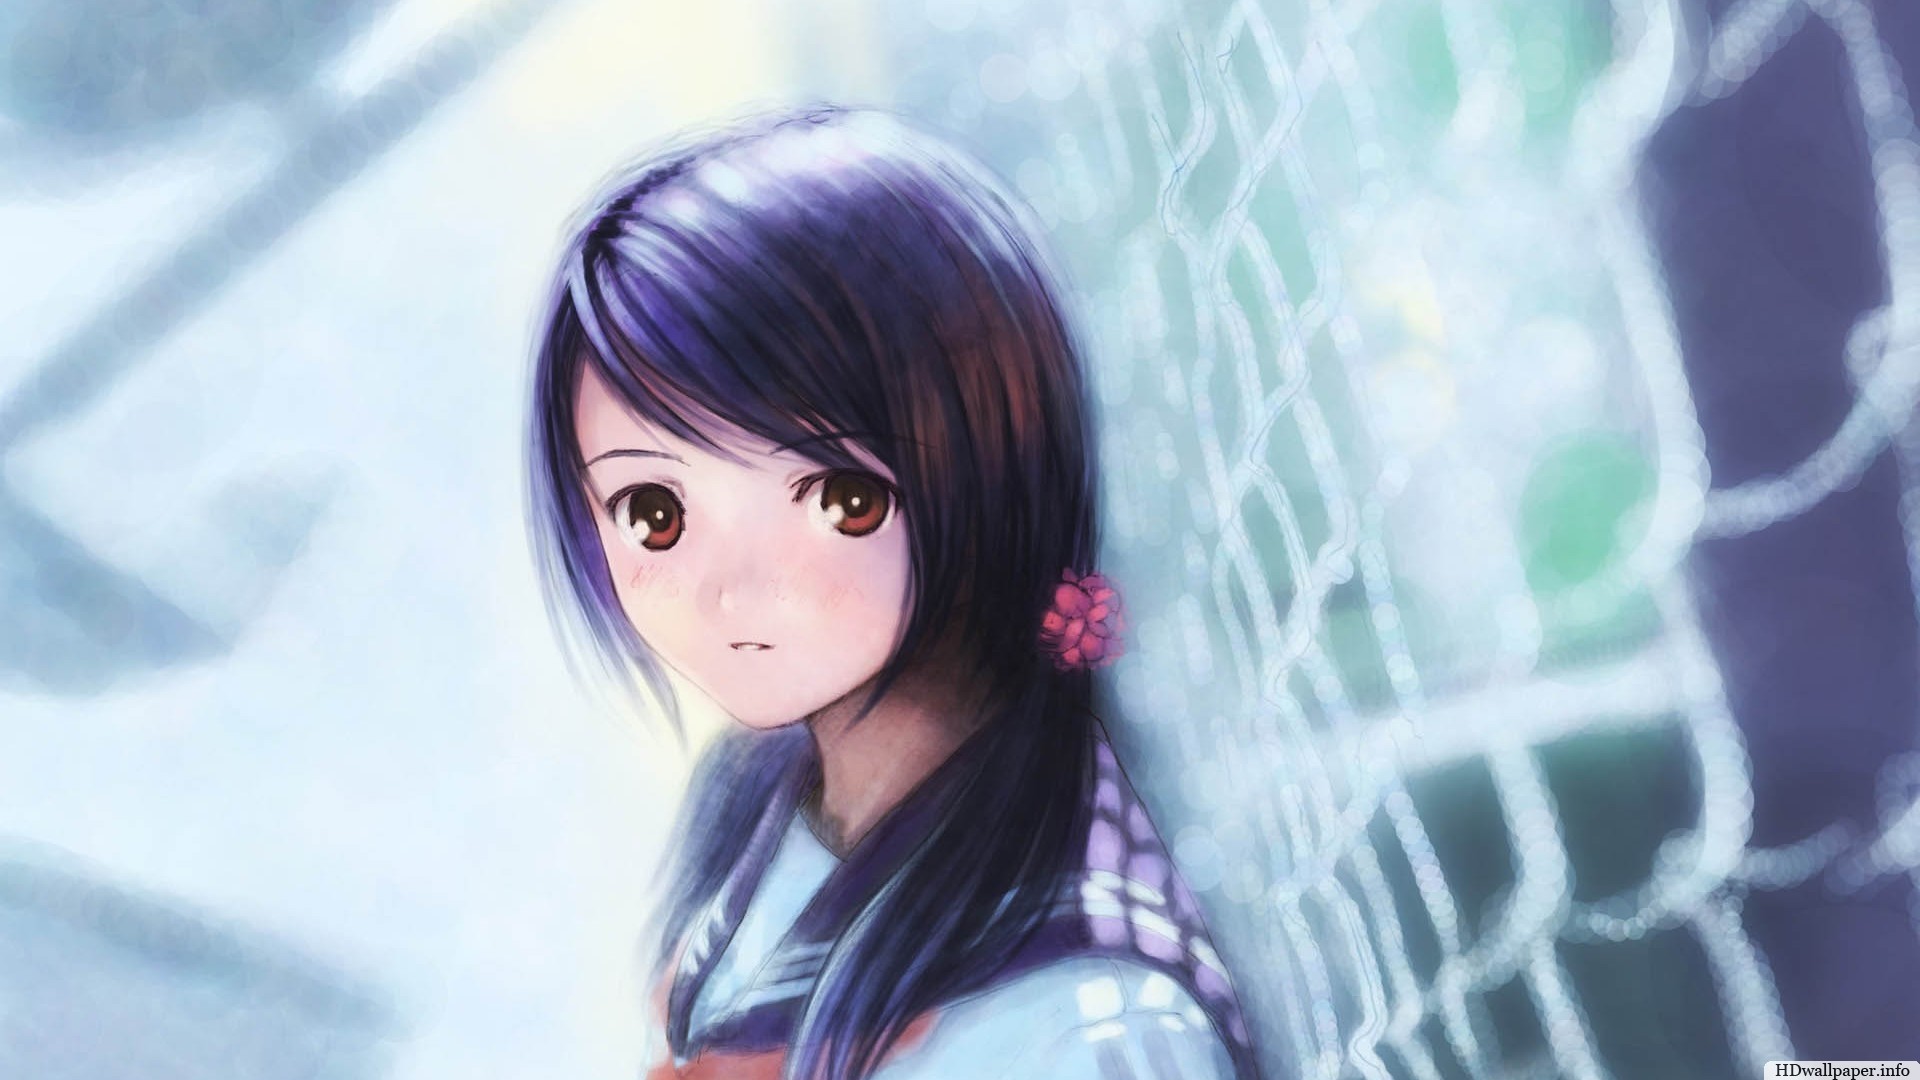 Cute Anime Girl Wallpaper Hd – cute